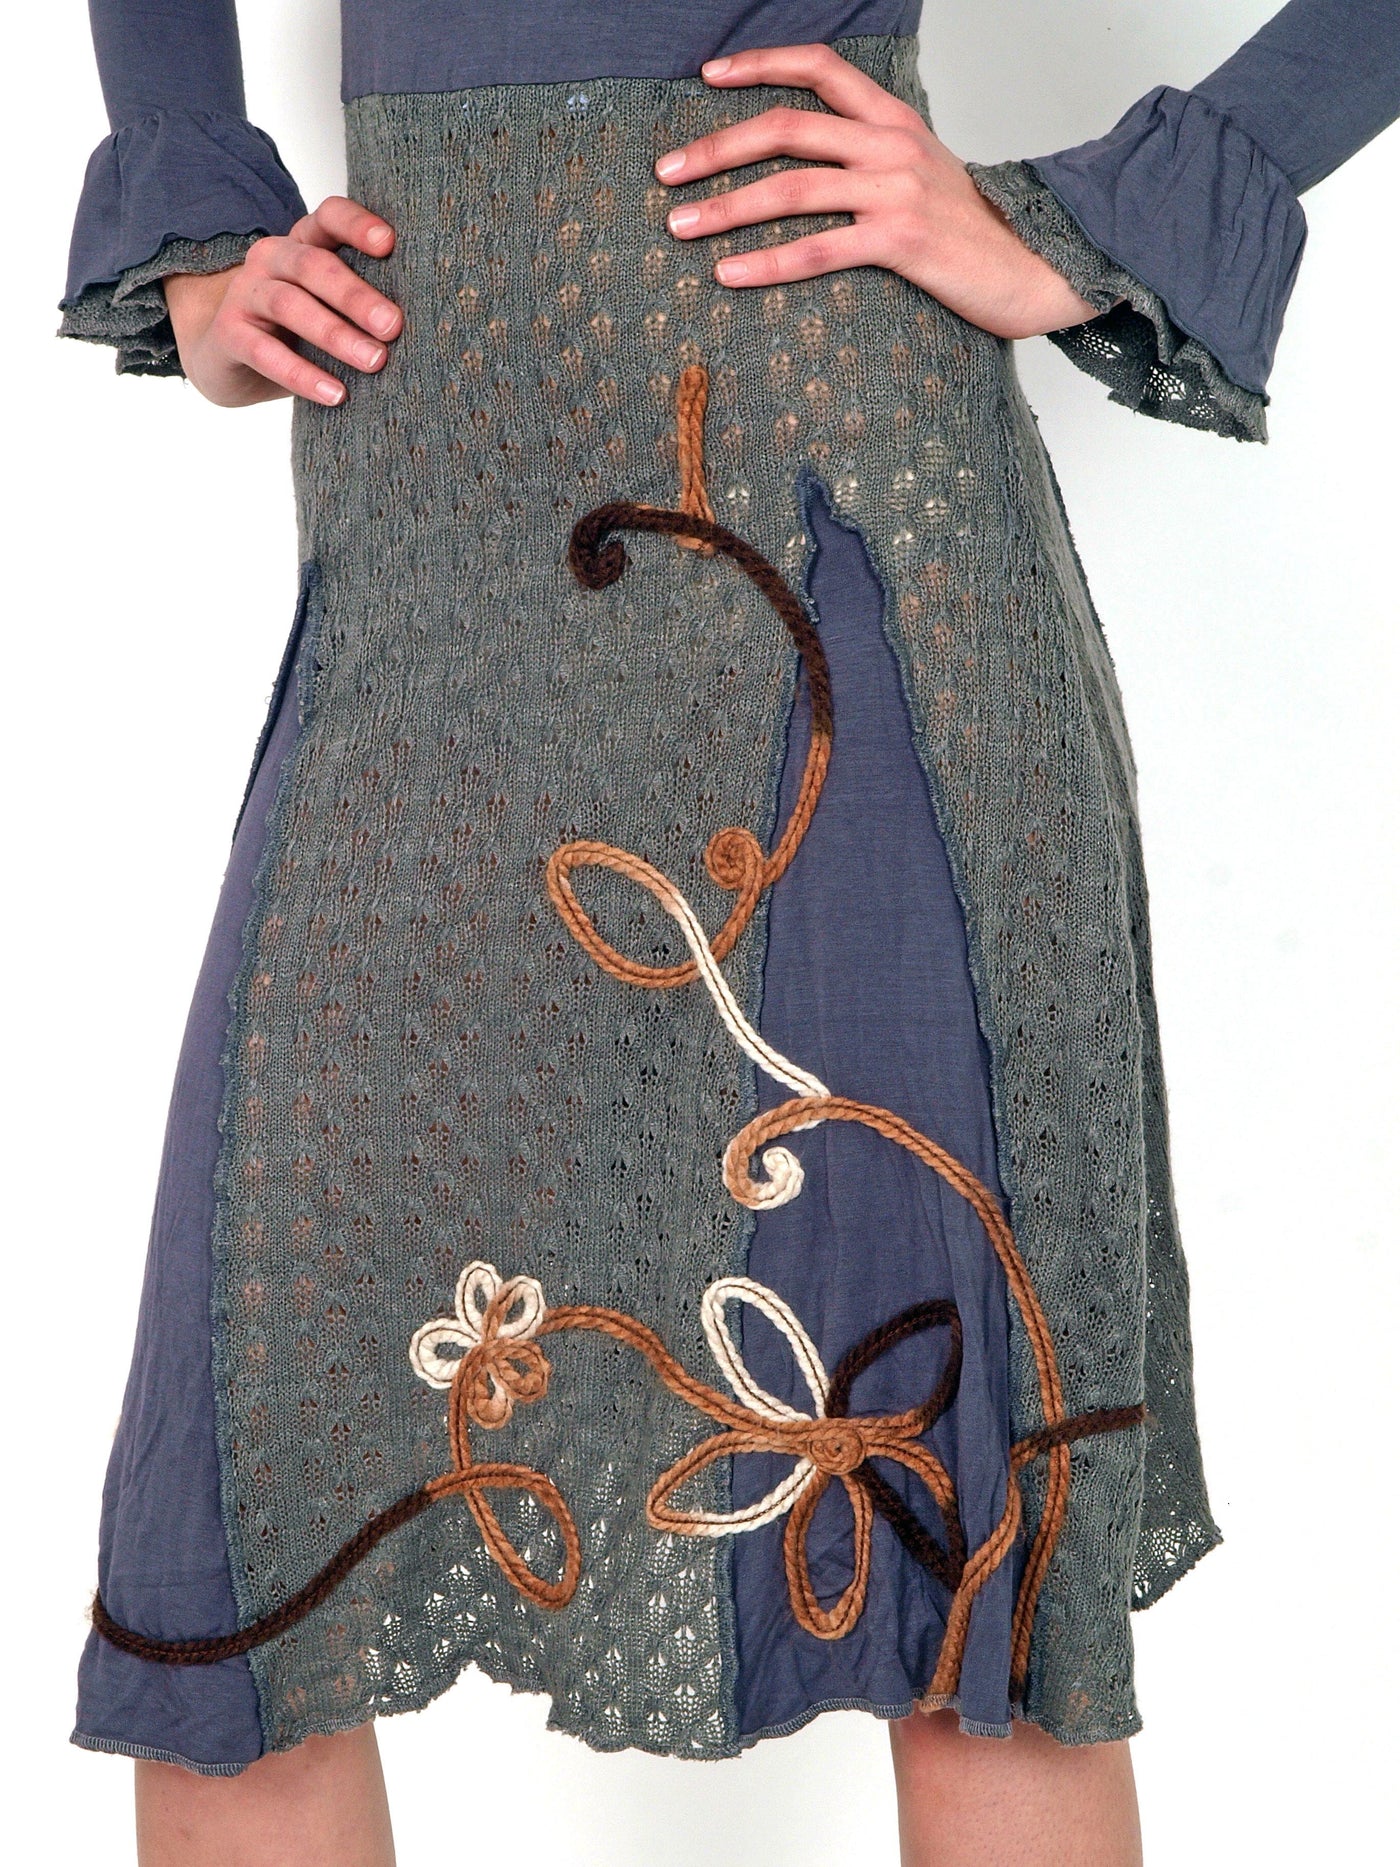 Playful long-sleeved knee-length dress